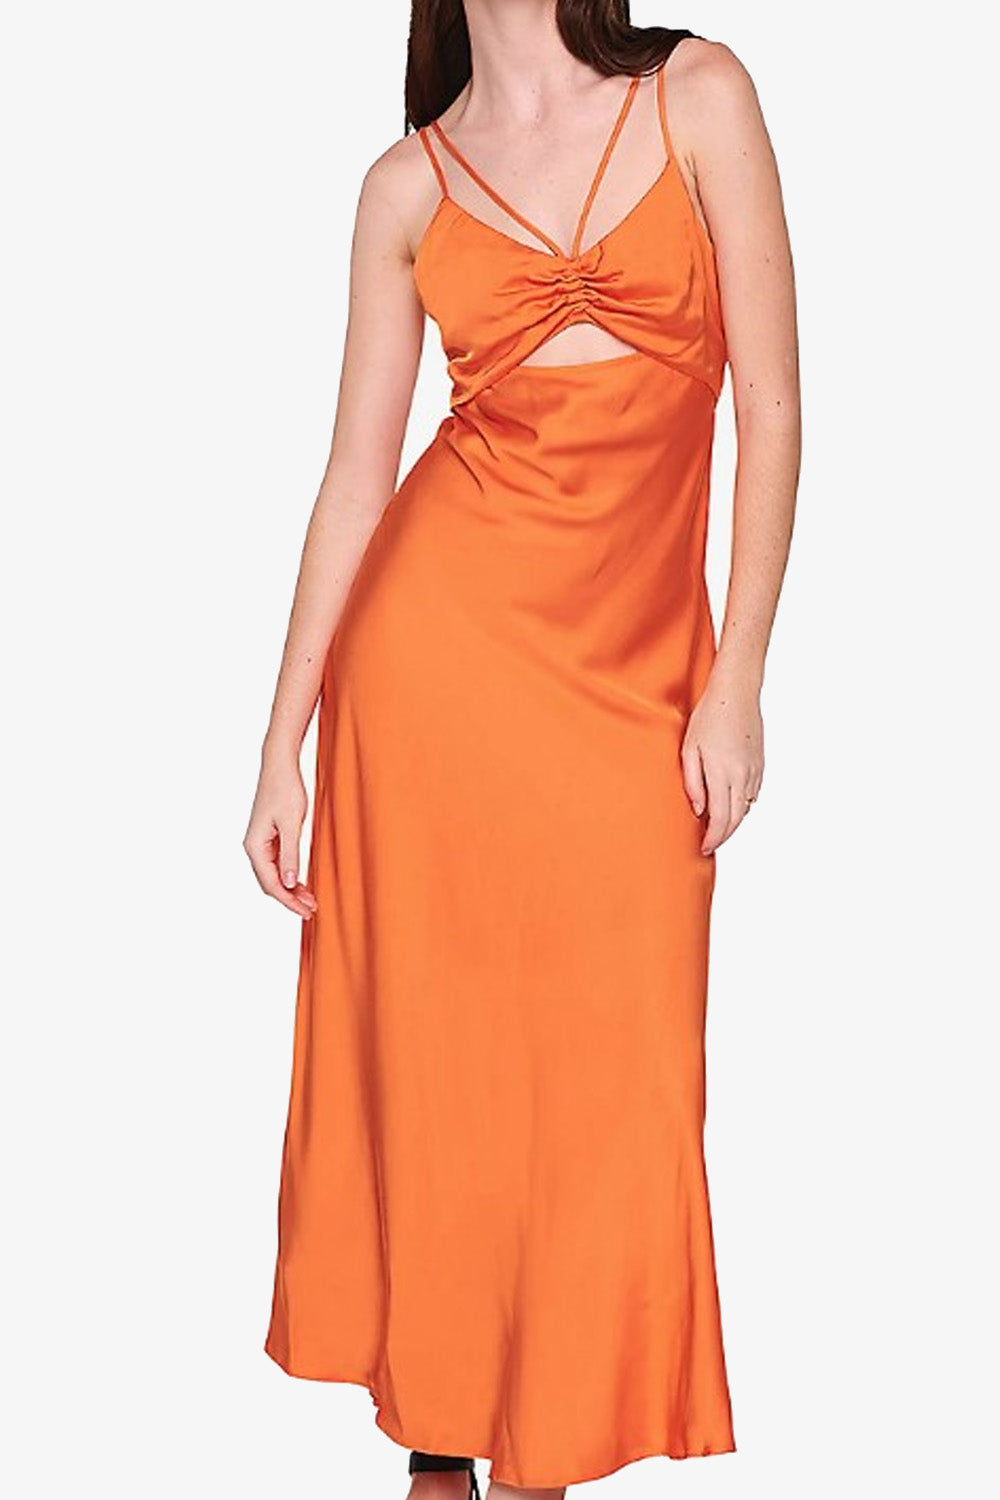 Incandescent Orange Dress